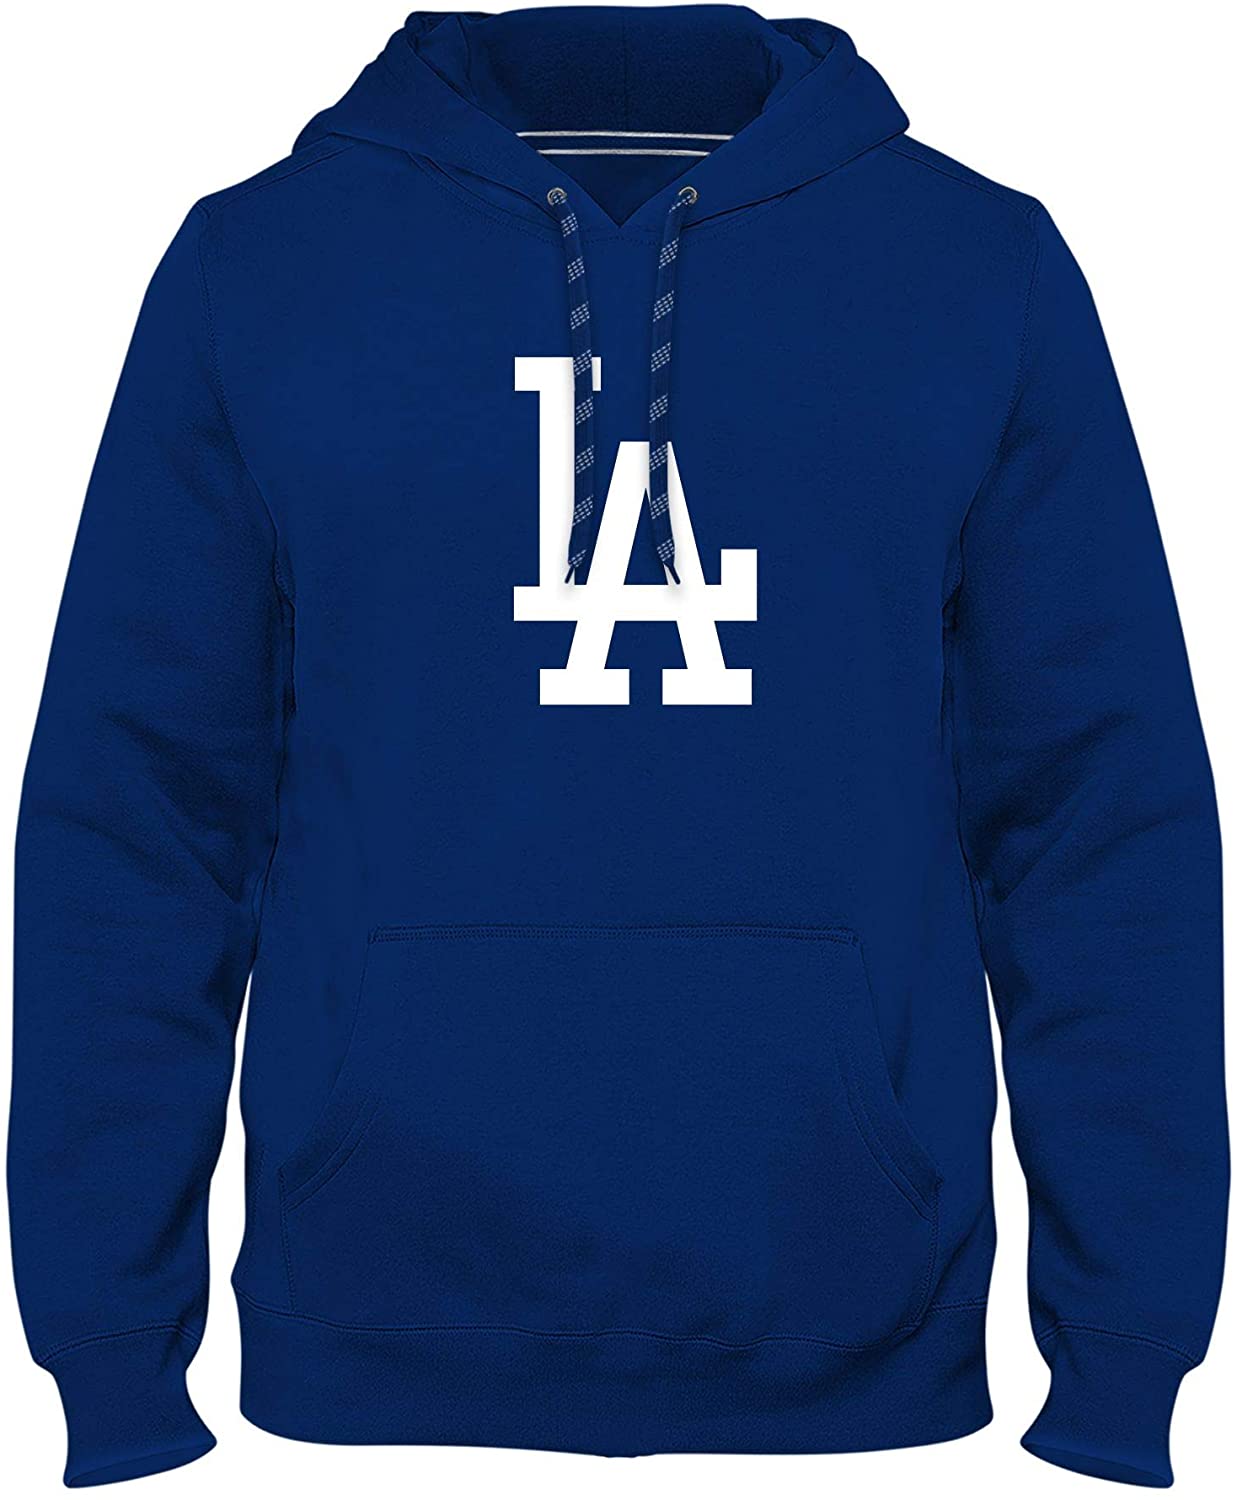 Official Los Angeles Dodgers Hoodies, Dodgers Sweatshirts